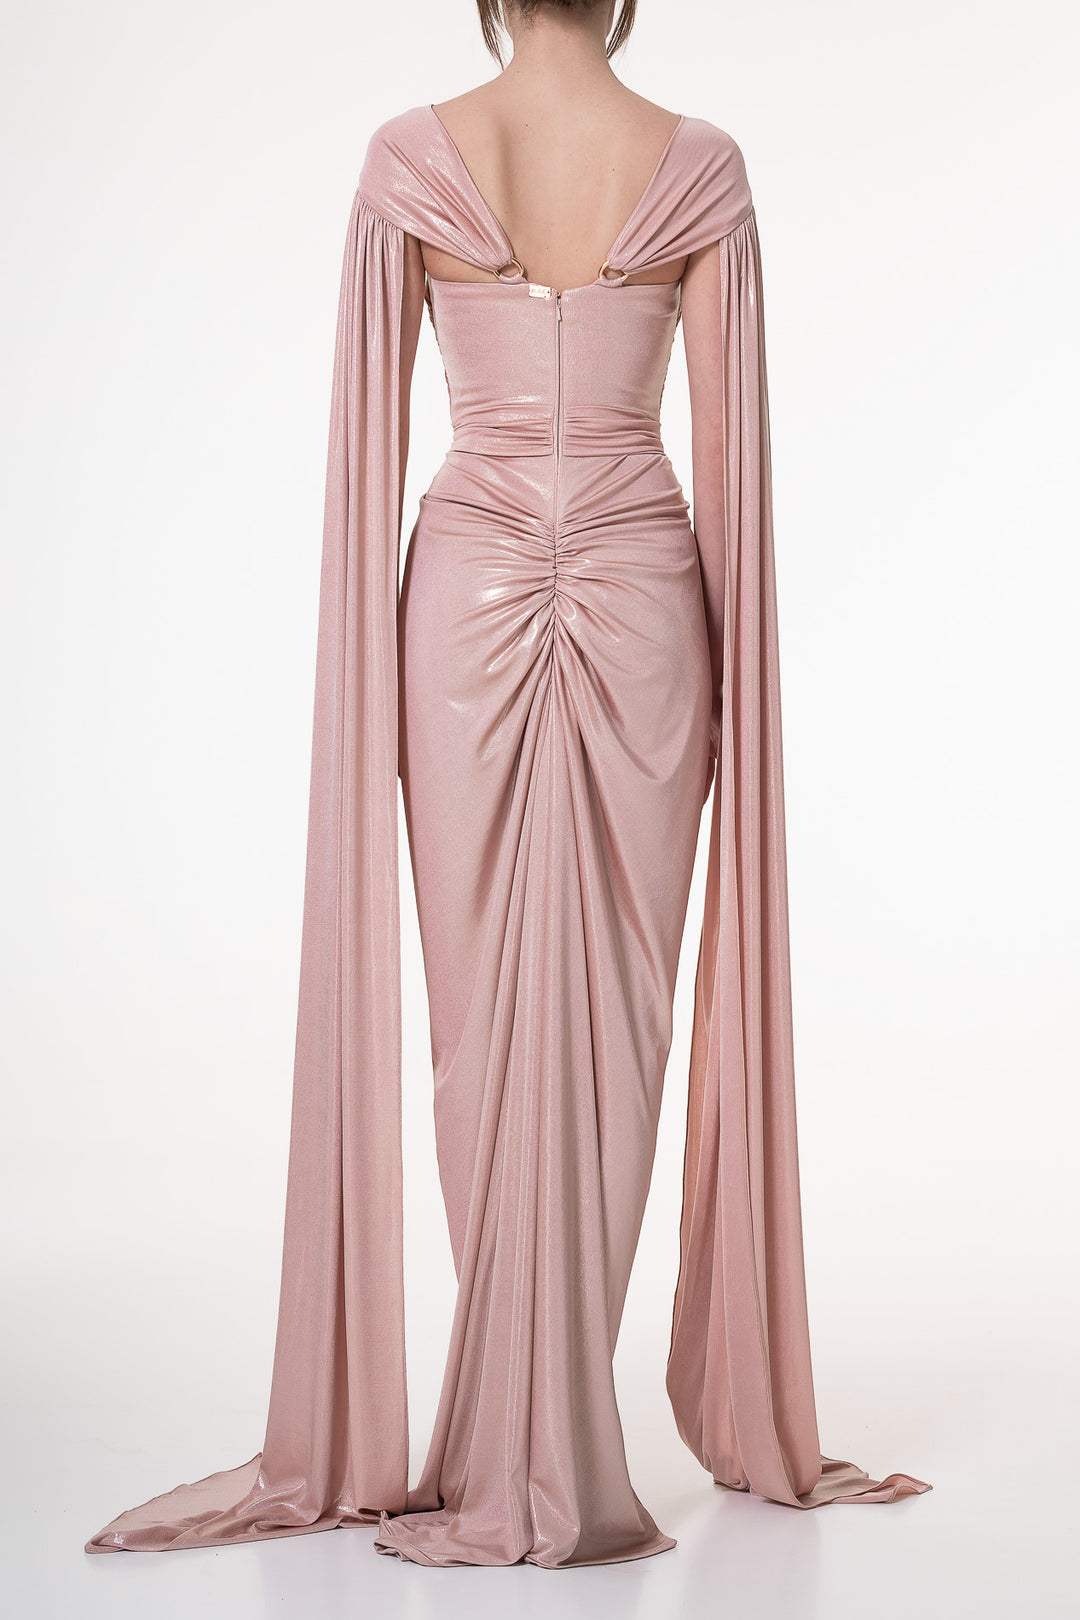 Asteria Shimmer Rose Long Jersey Dress